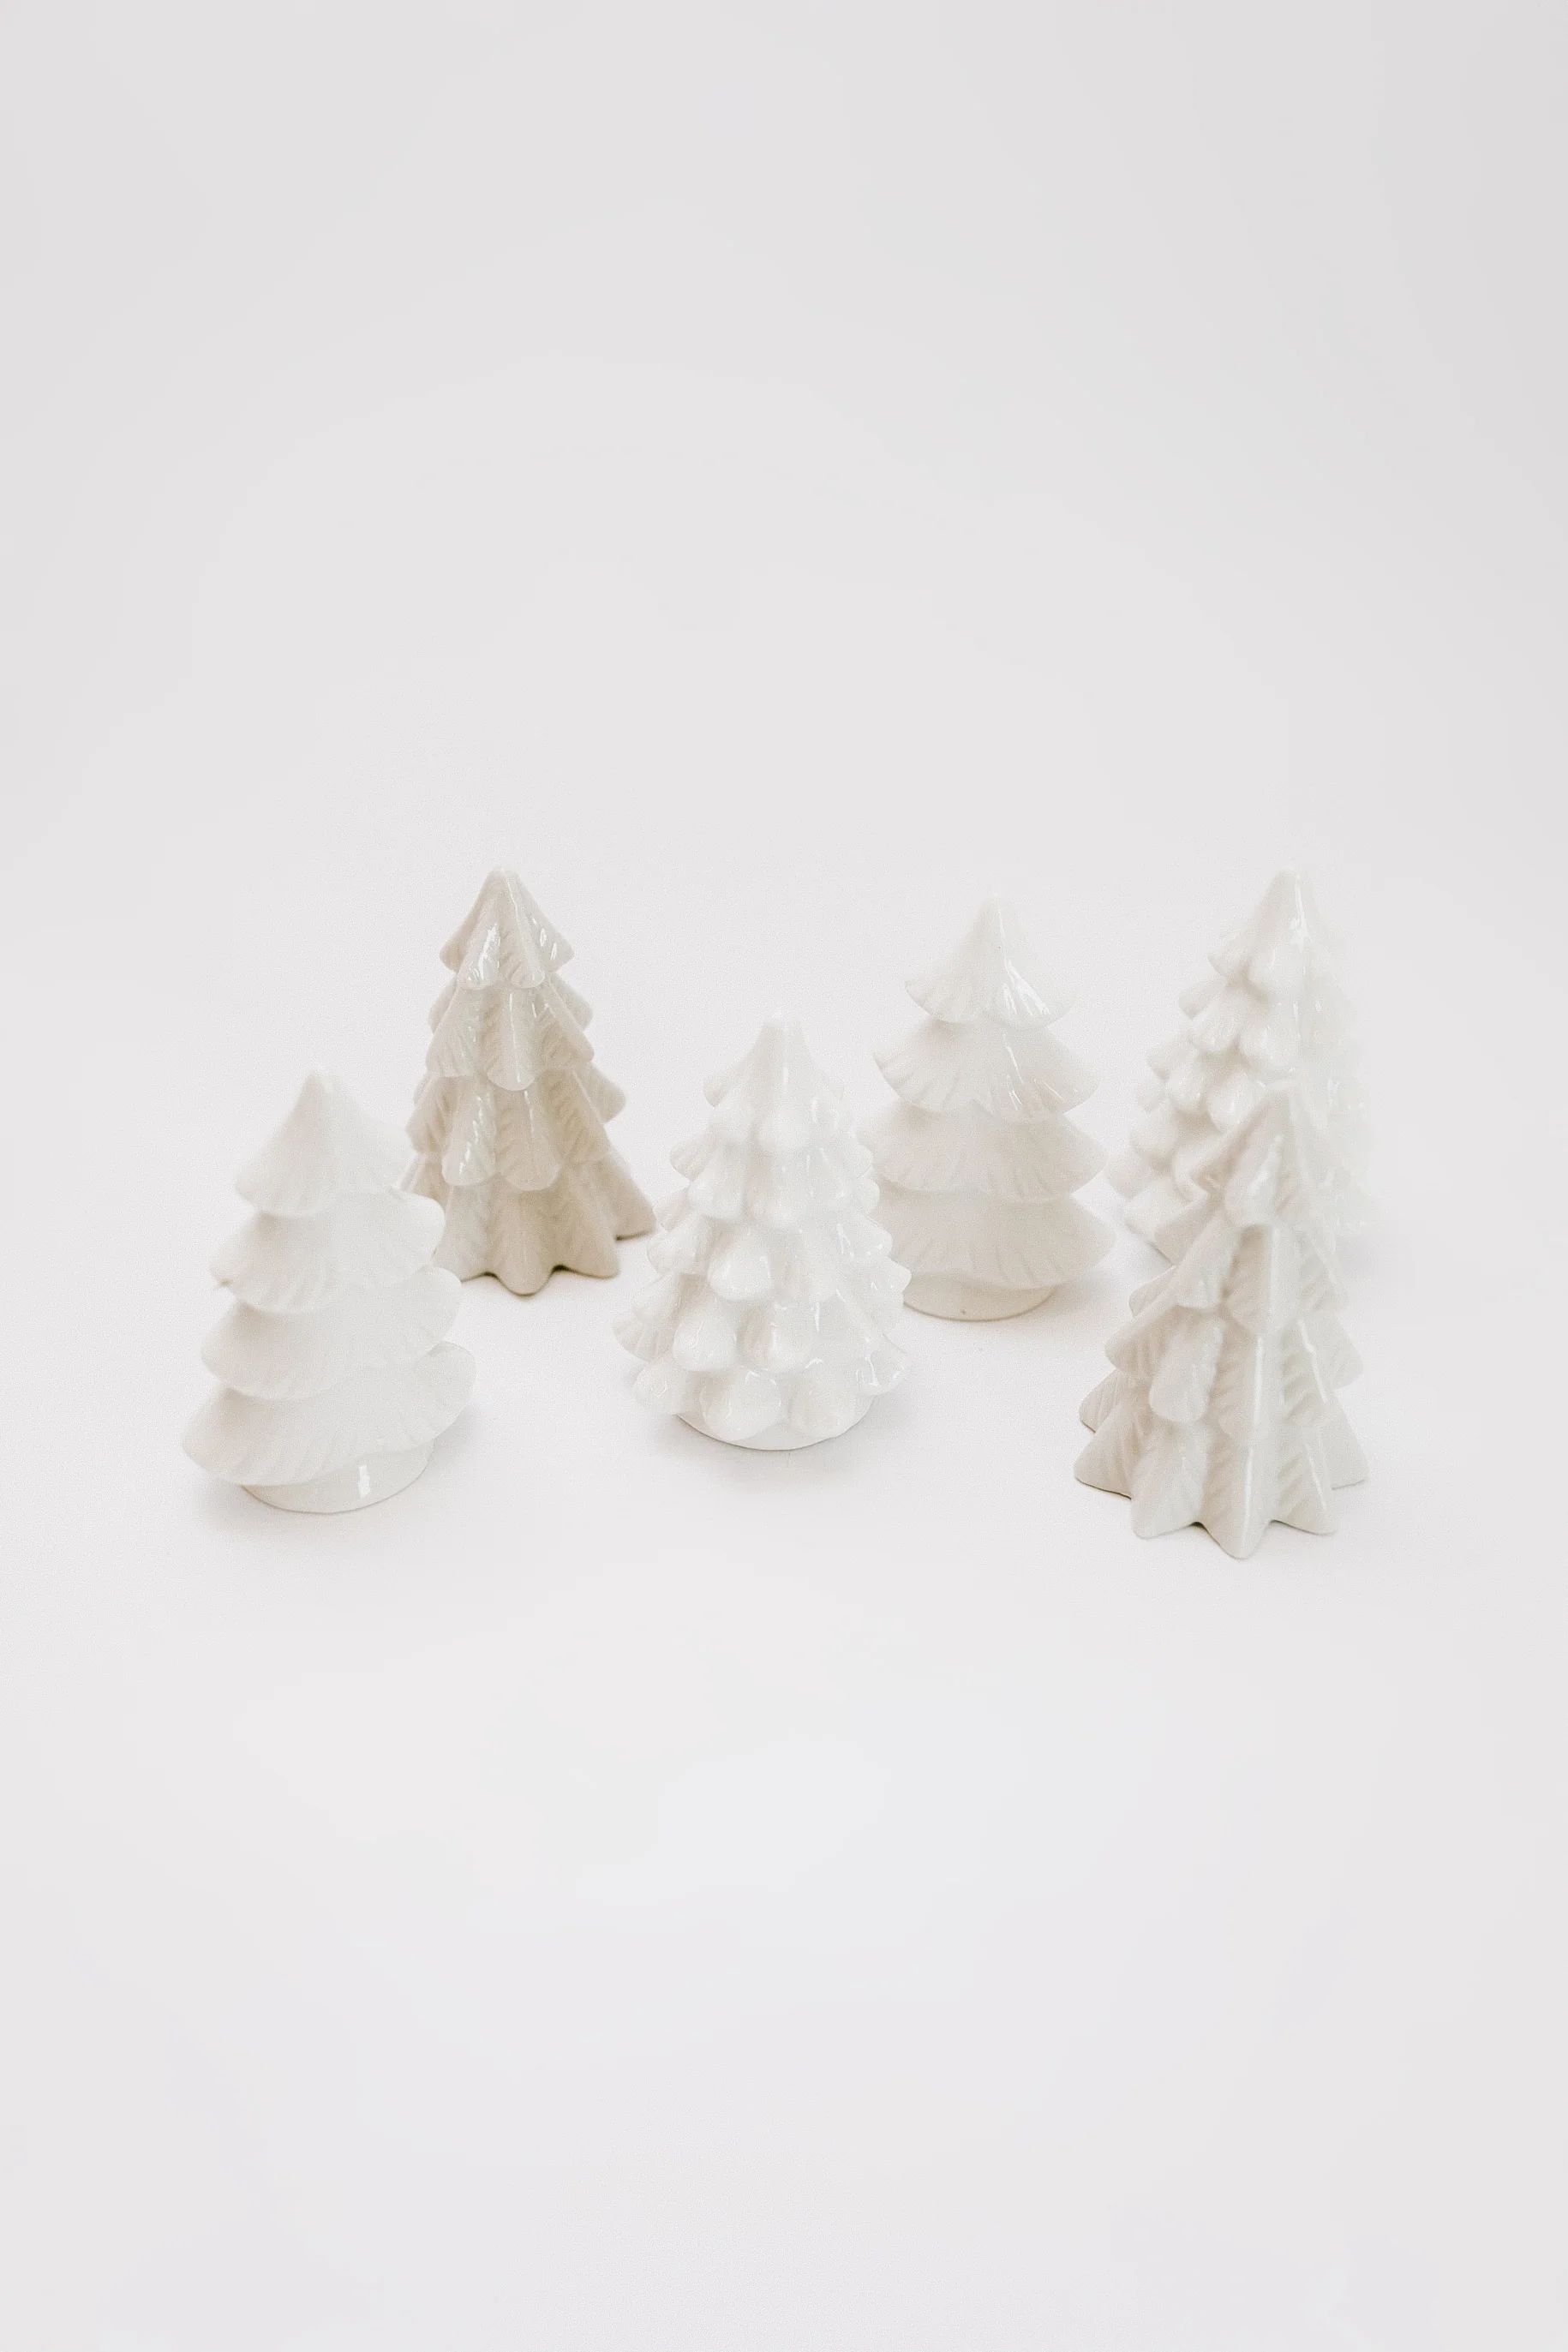 Starlight Stone Trees - Set of 6 | THELIFESTYLEDCO